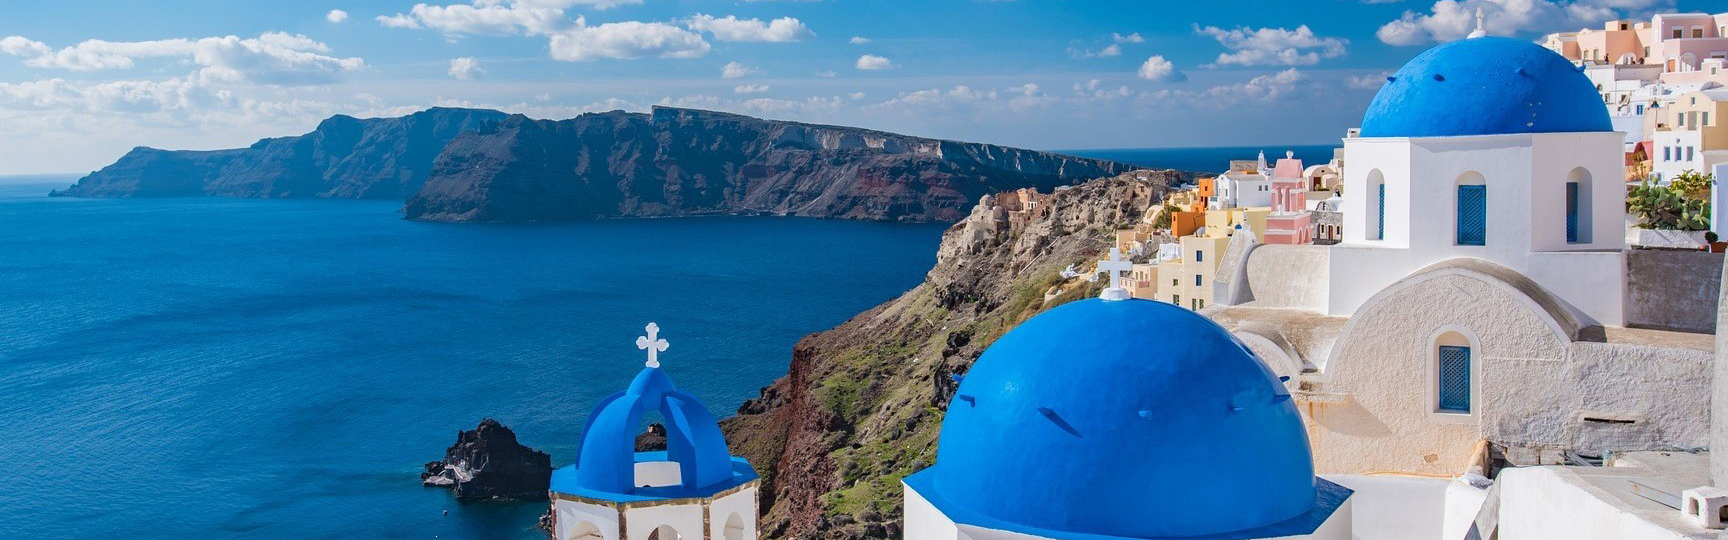 Slider image, Santorini Coast, Blue Domed Greek Churches on cliffs overlooking the ocean